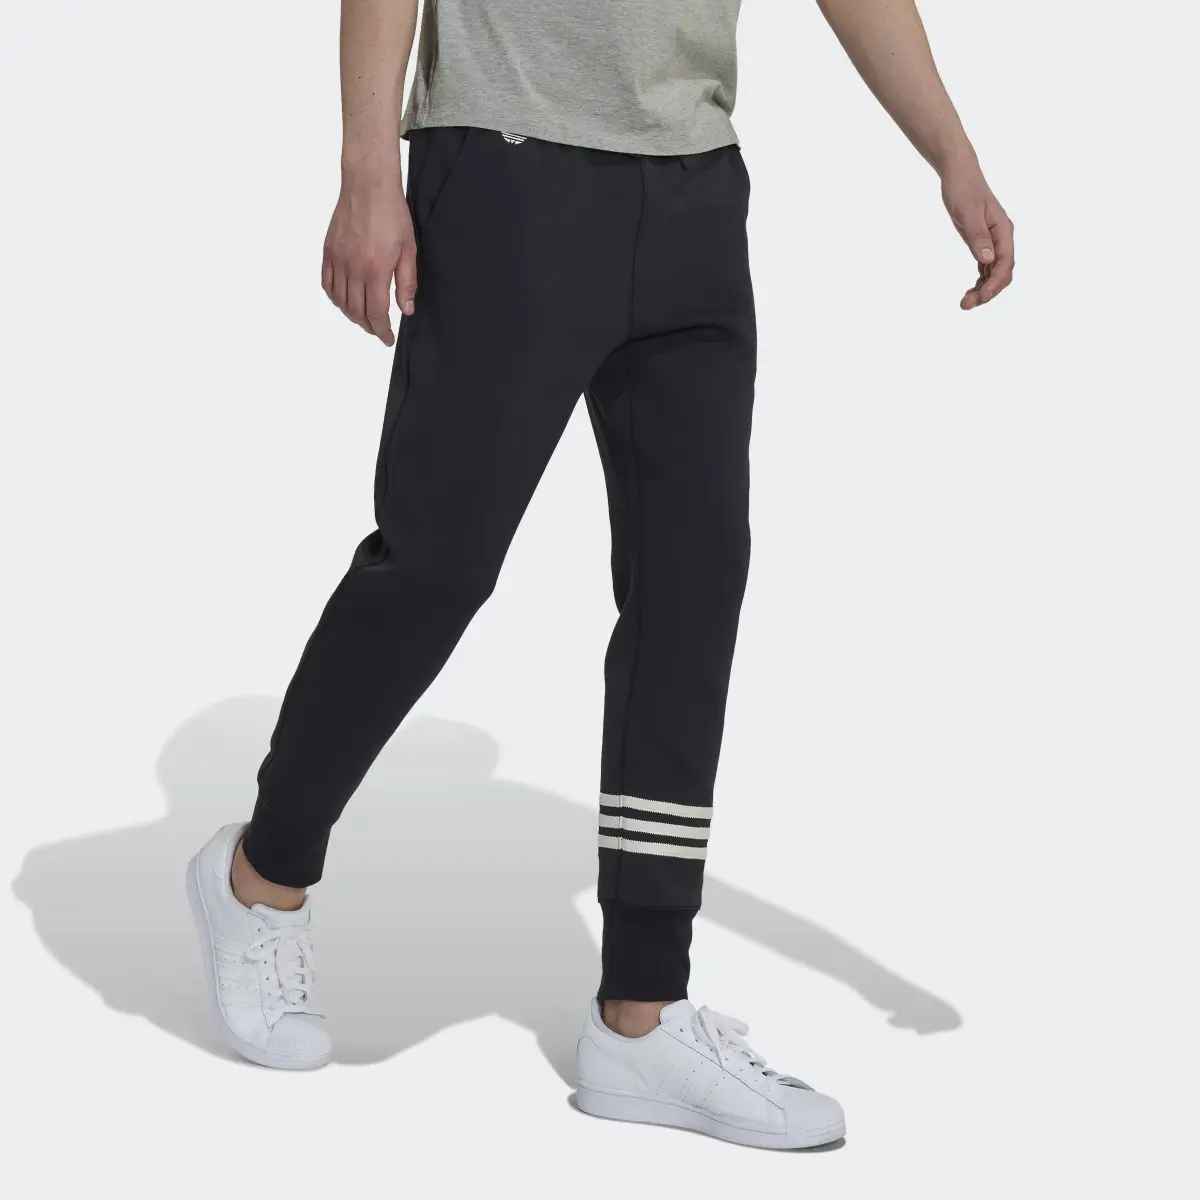 Adidas Adicolor Neuclassics SweatTracksuit Bottoms. 3